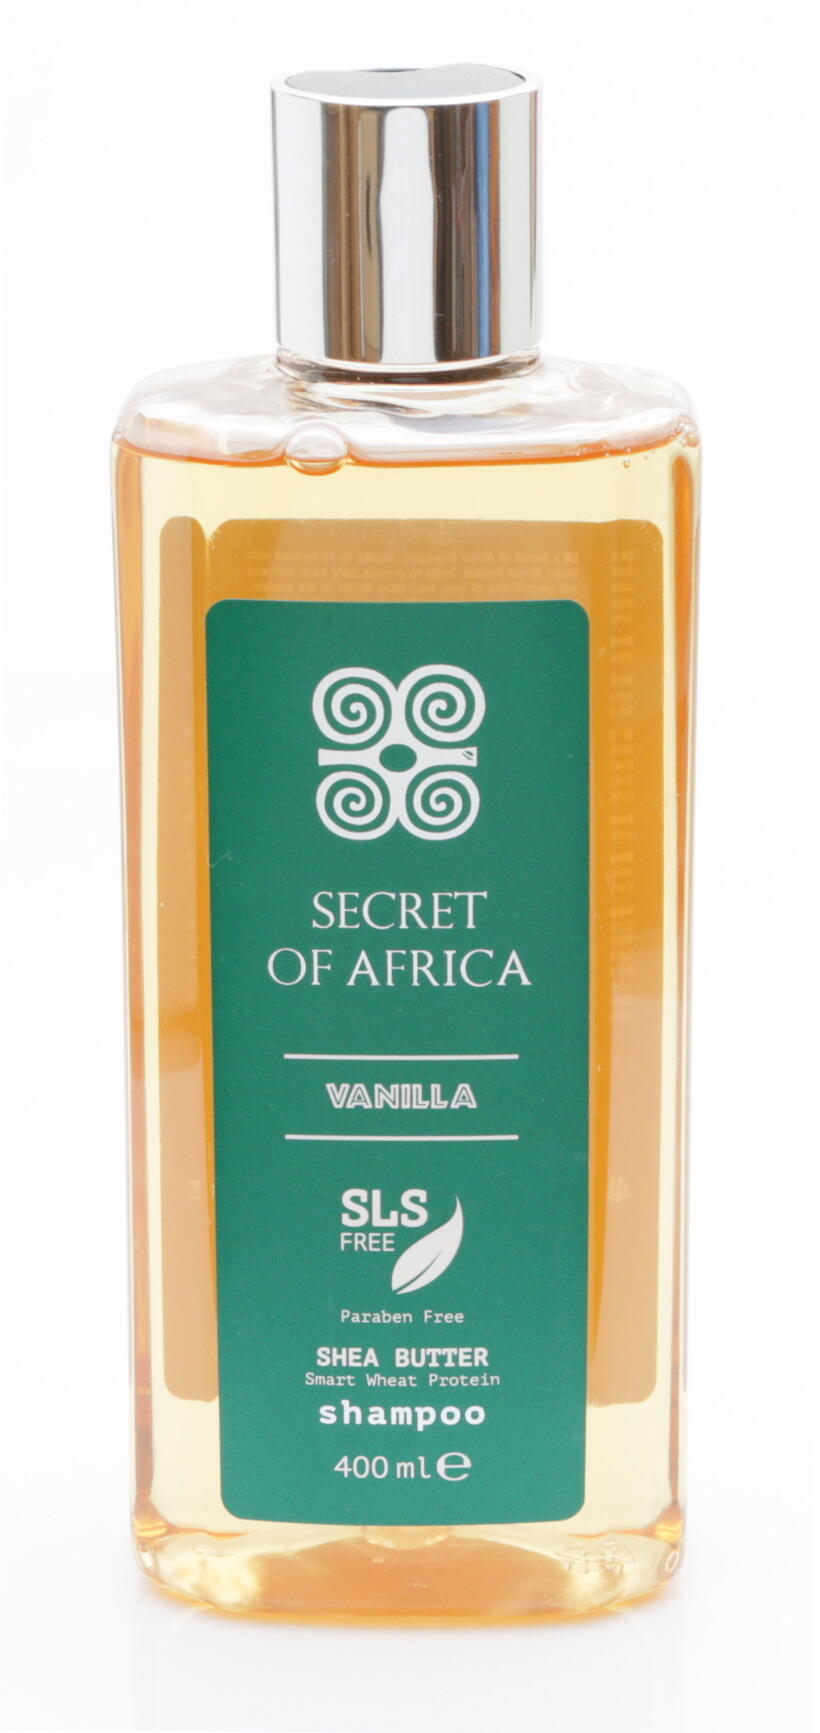 secret of Africa shampoo 400ml with shea butter